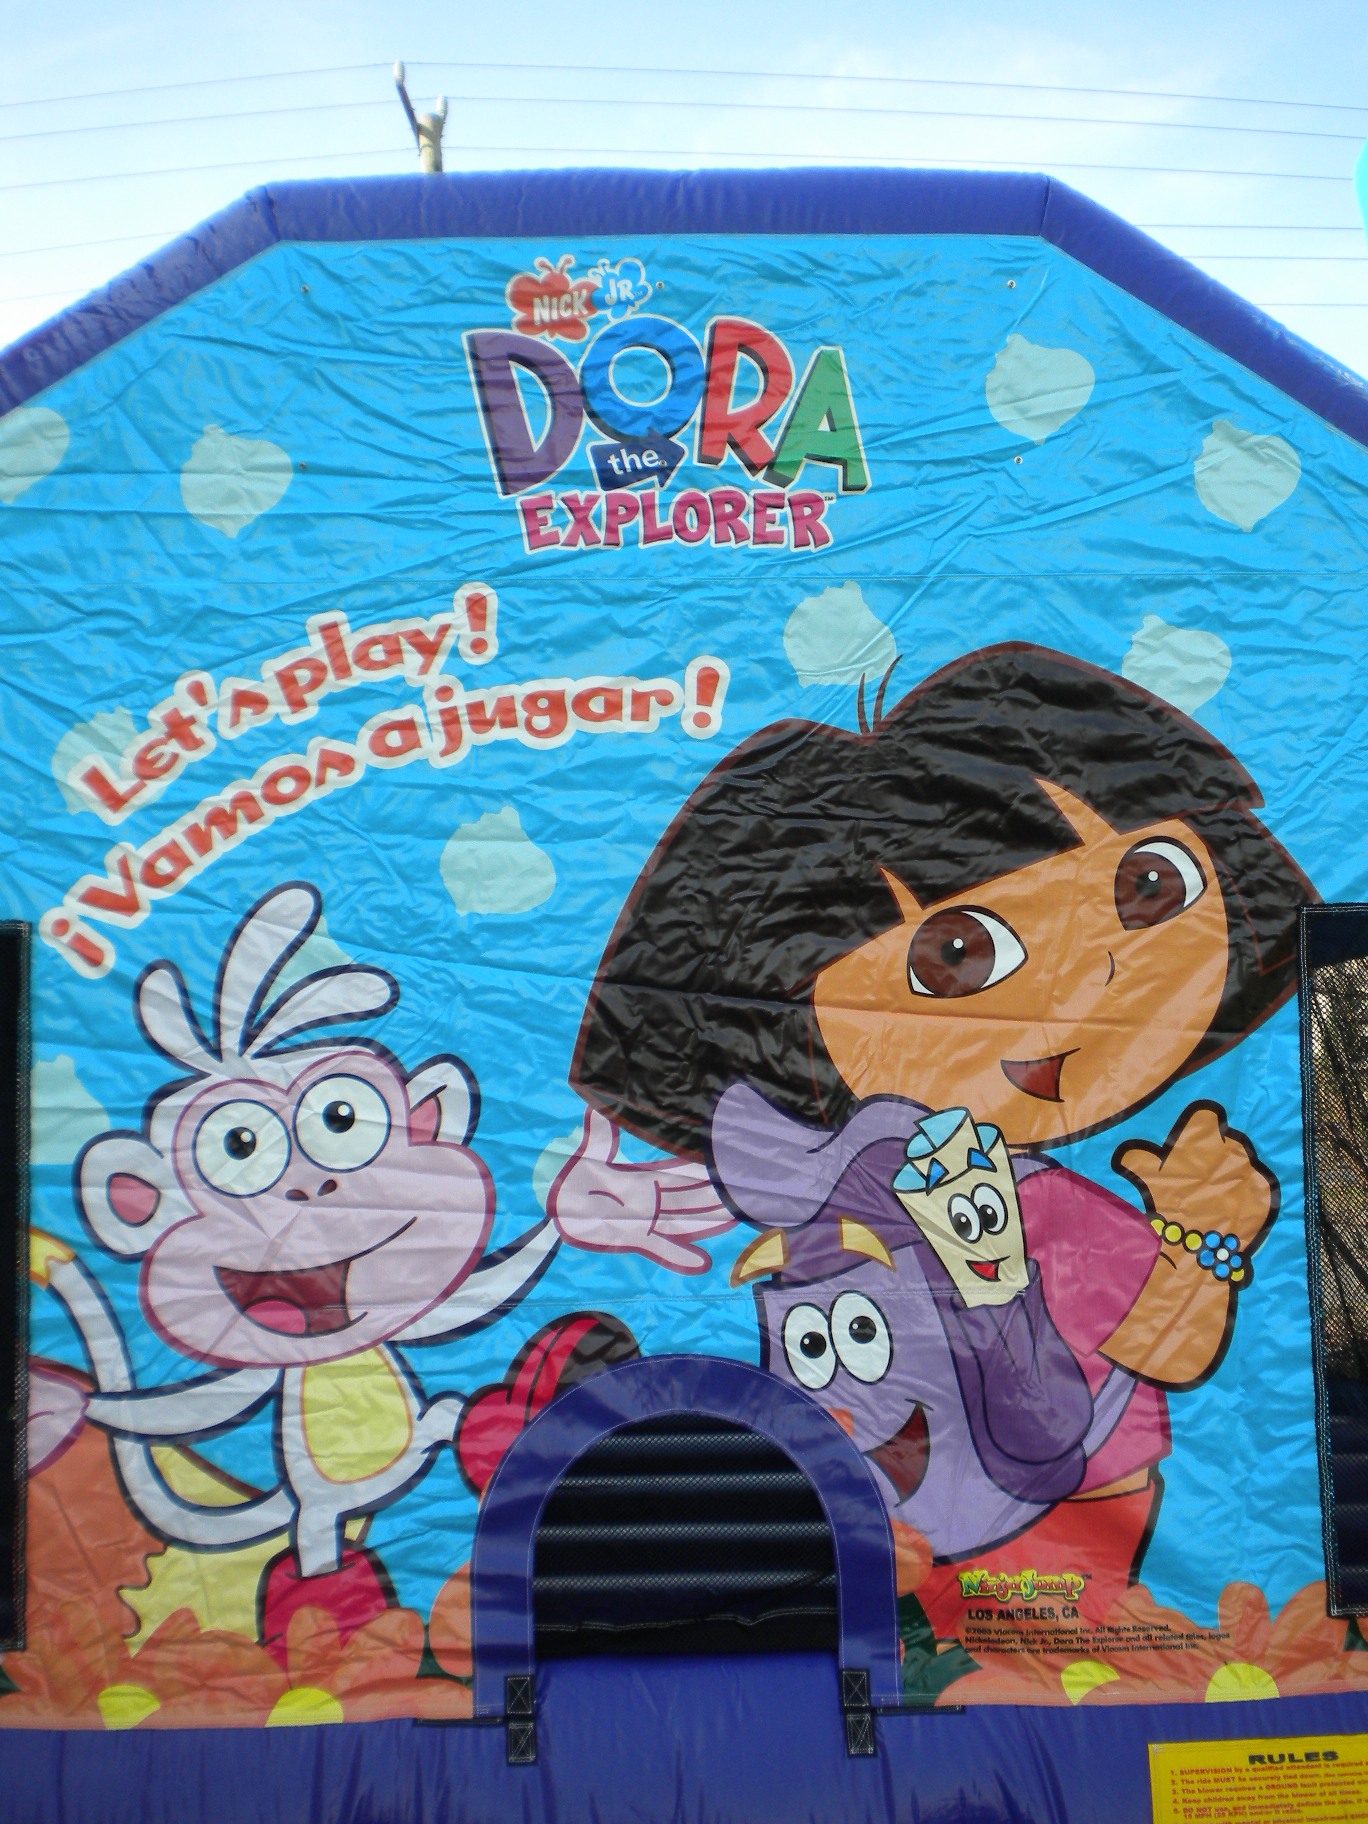 Dora the Explorer Jumper Moonbounce Bounce House Close up